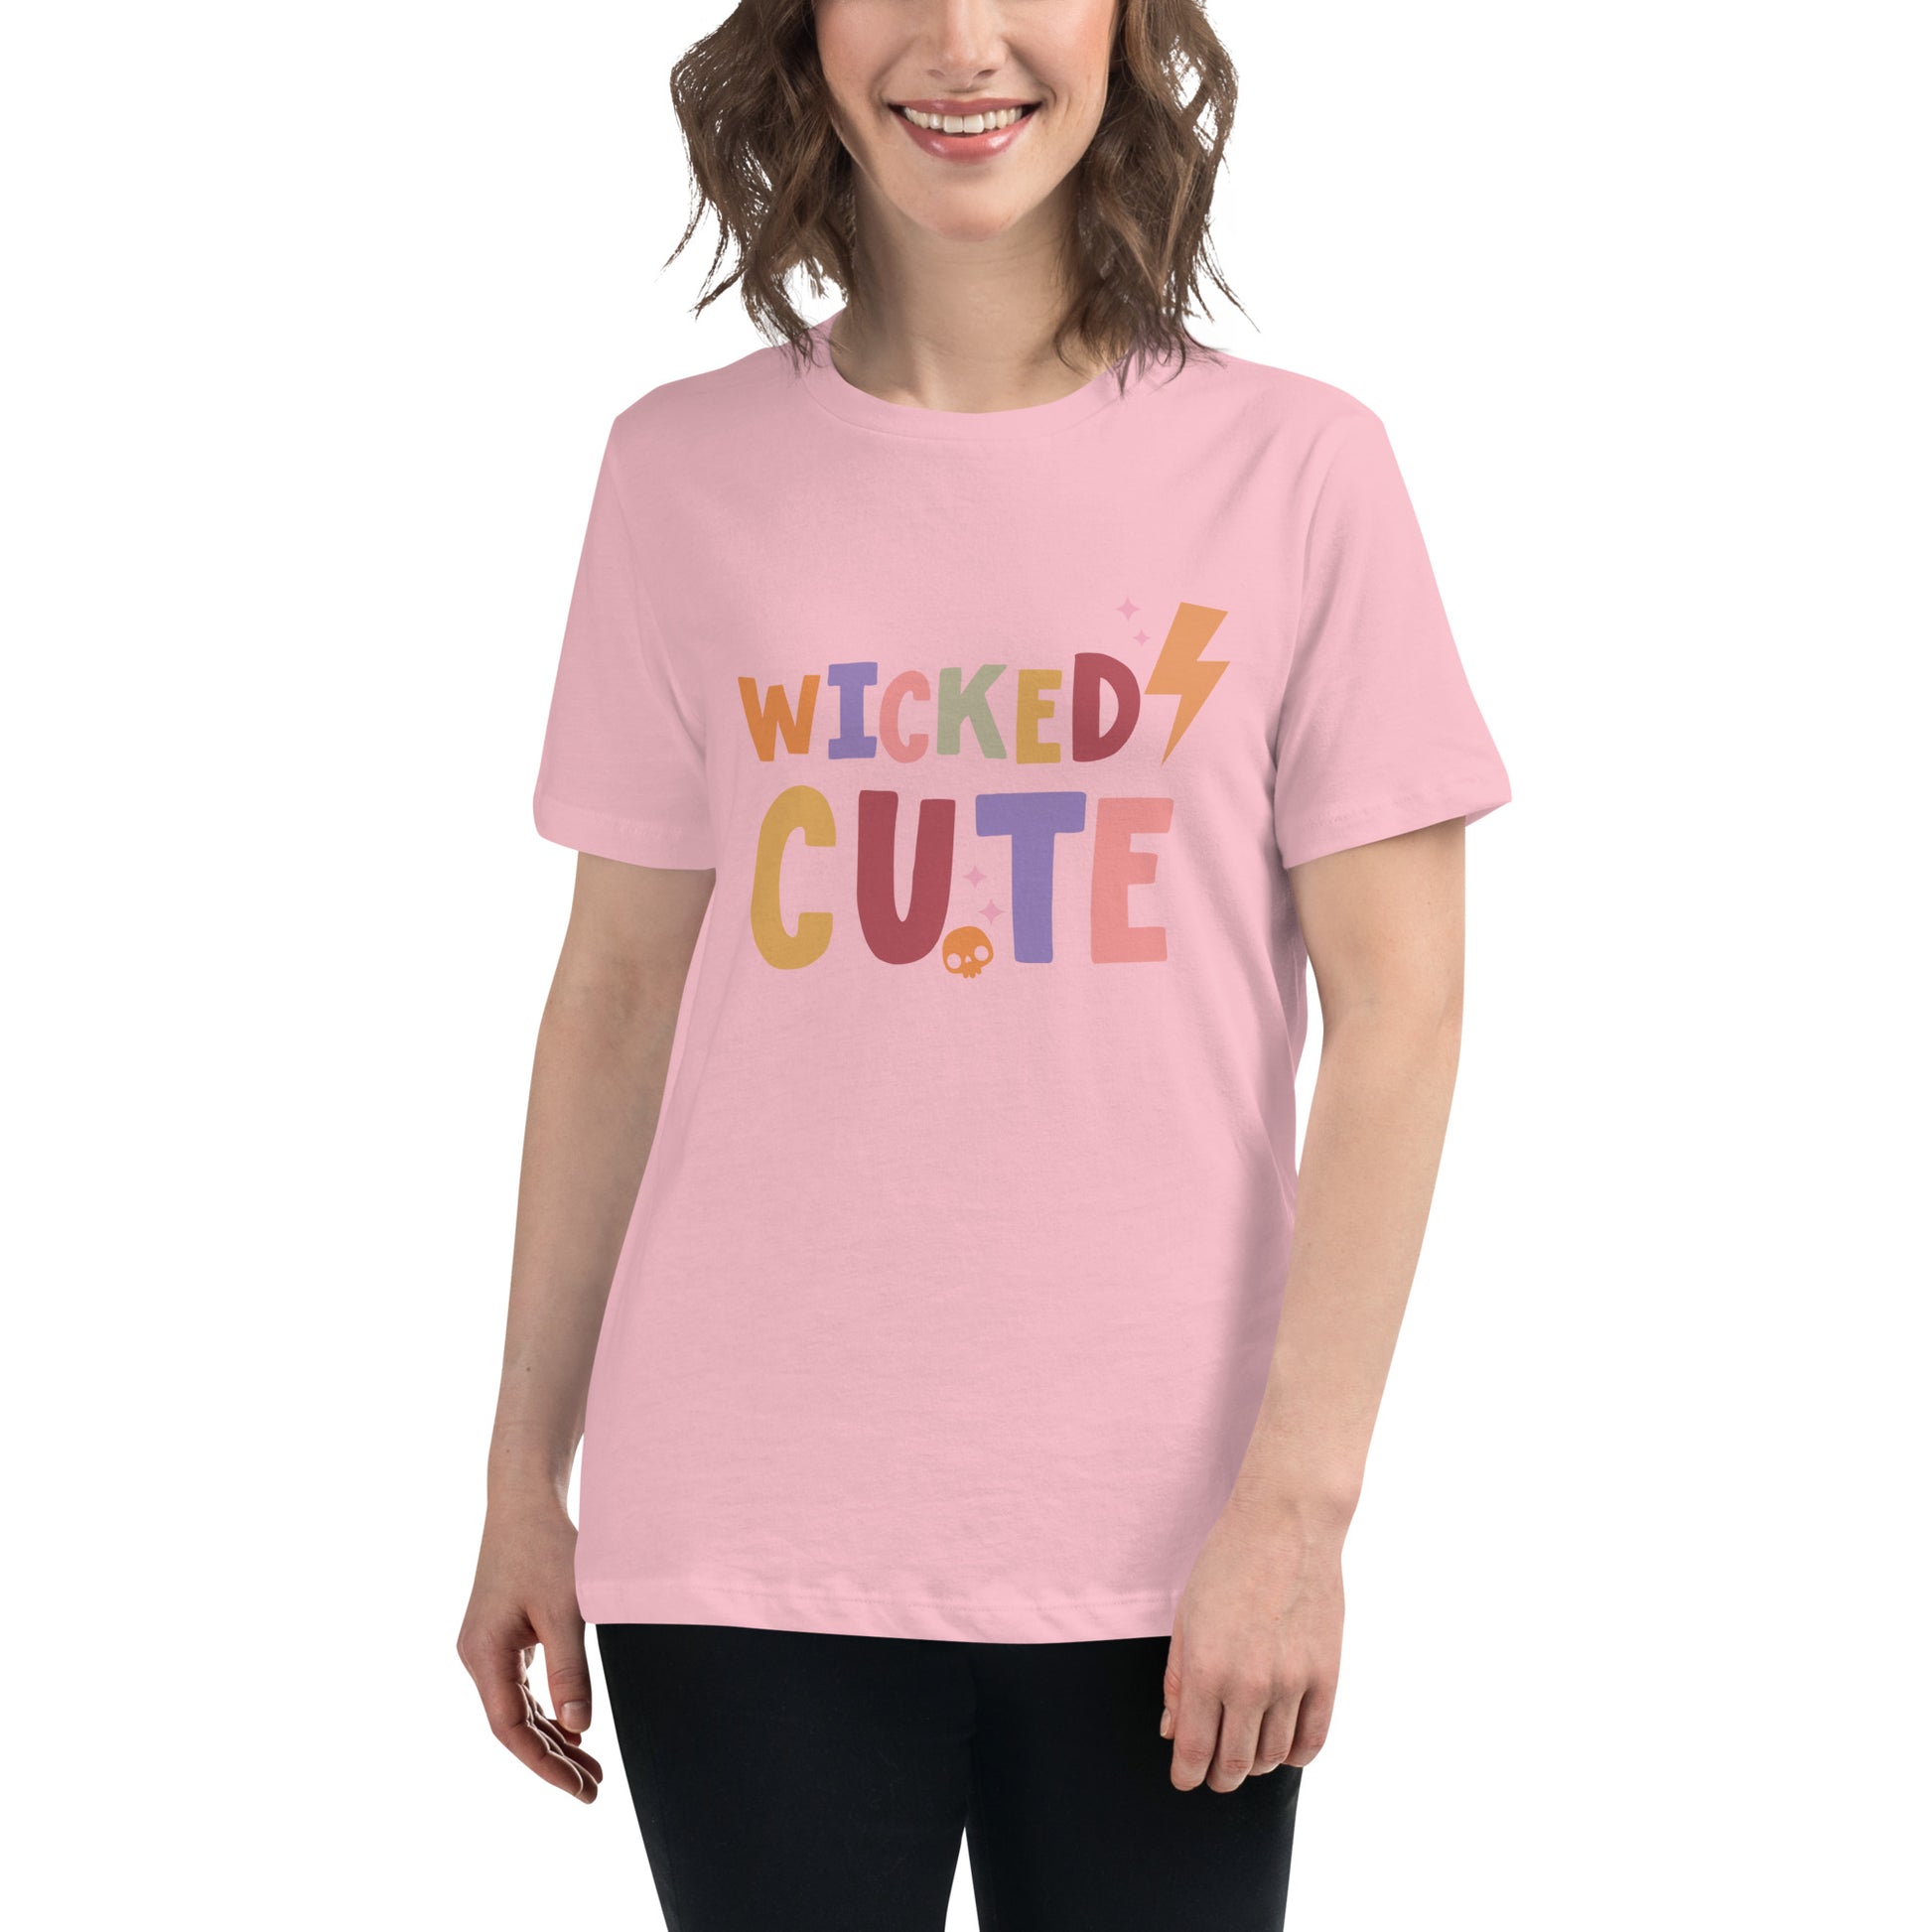 Wicked Cute Halloween Women's Relaxed T-Shirt Tee Tshirt